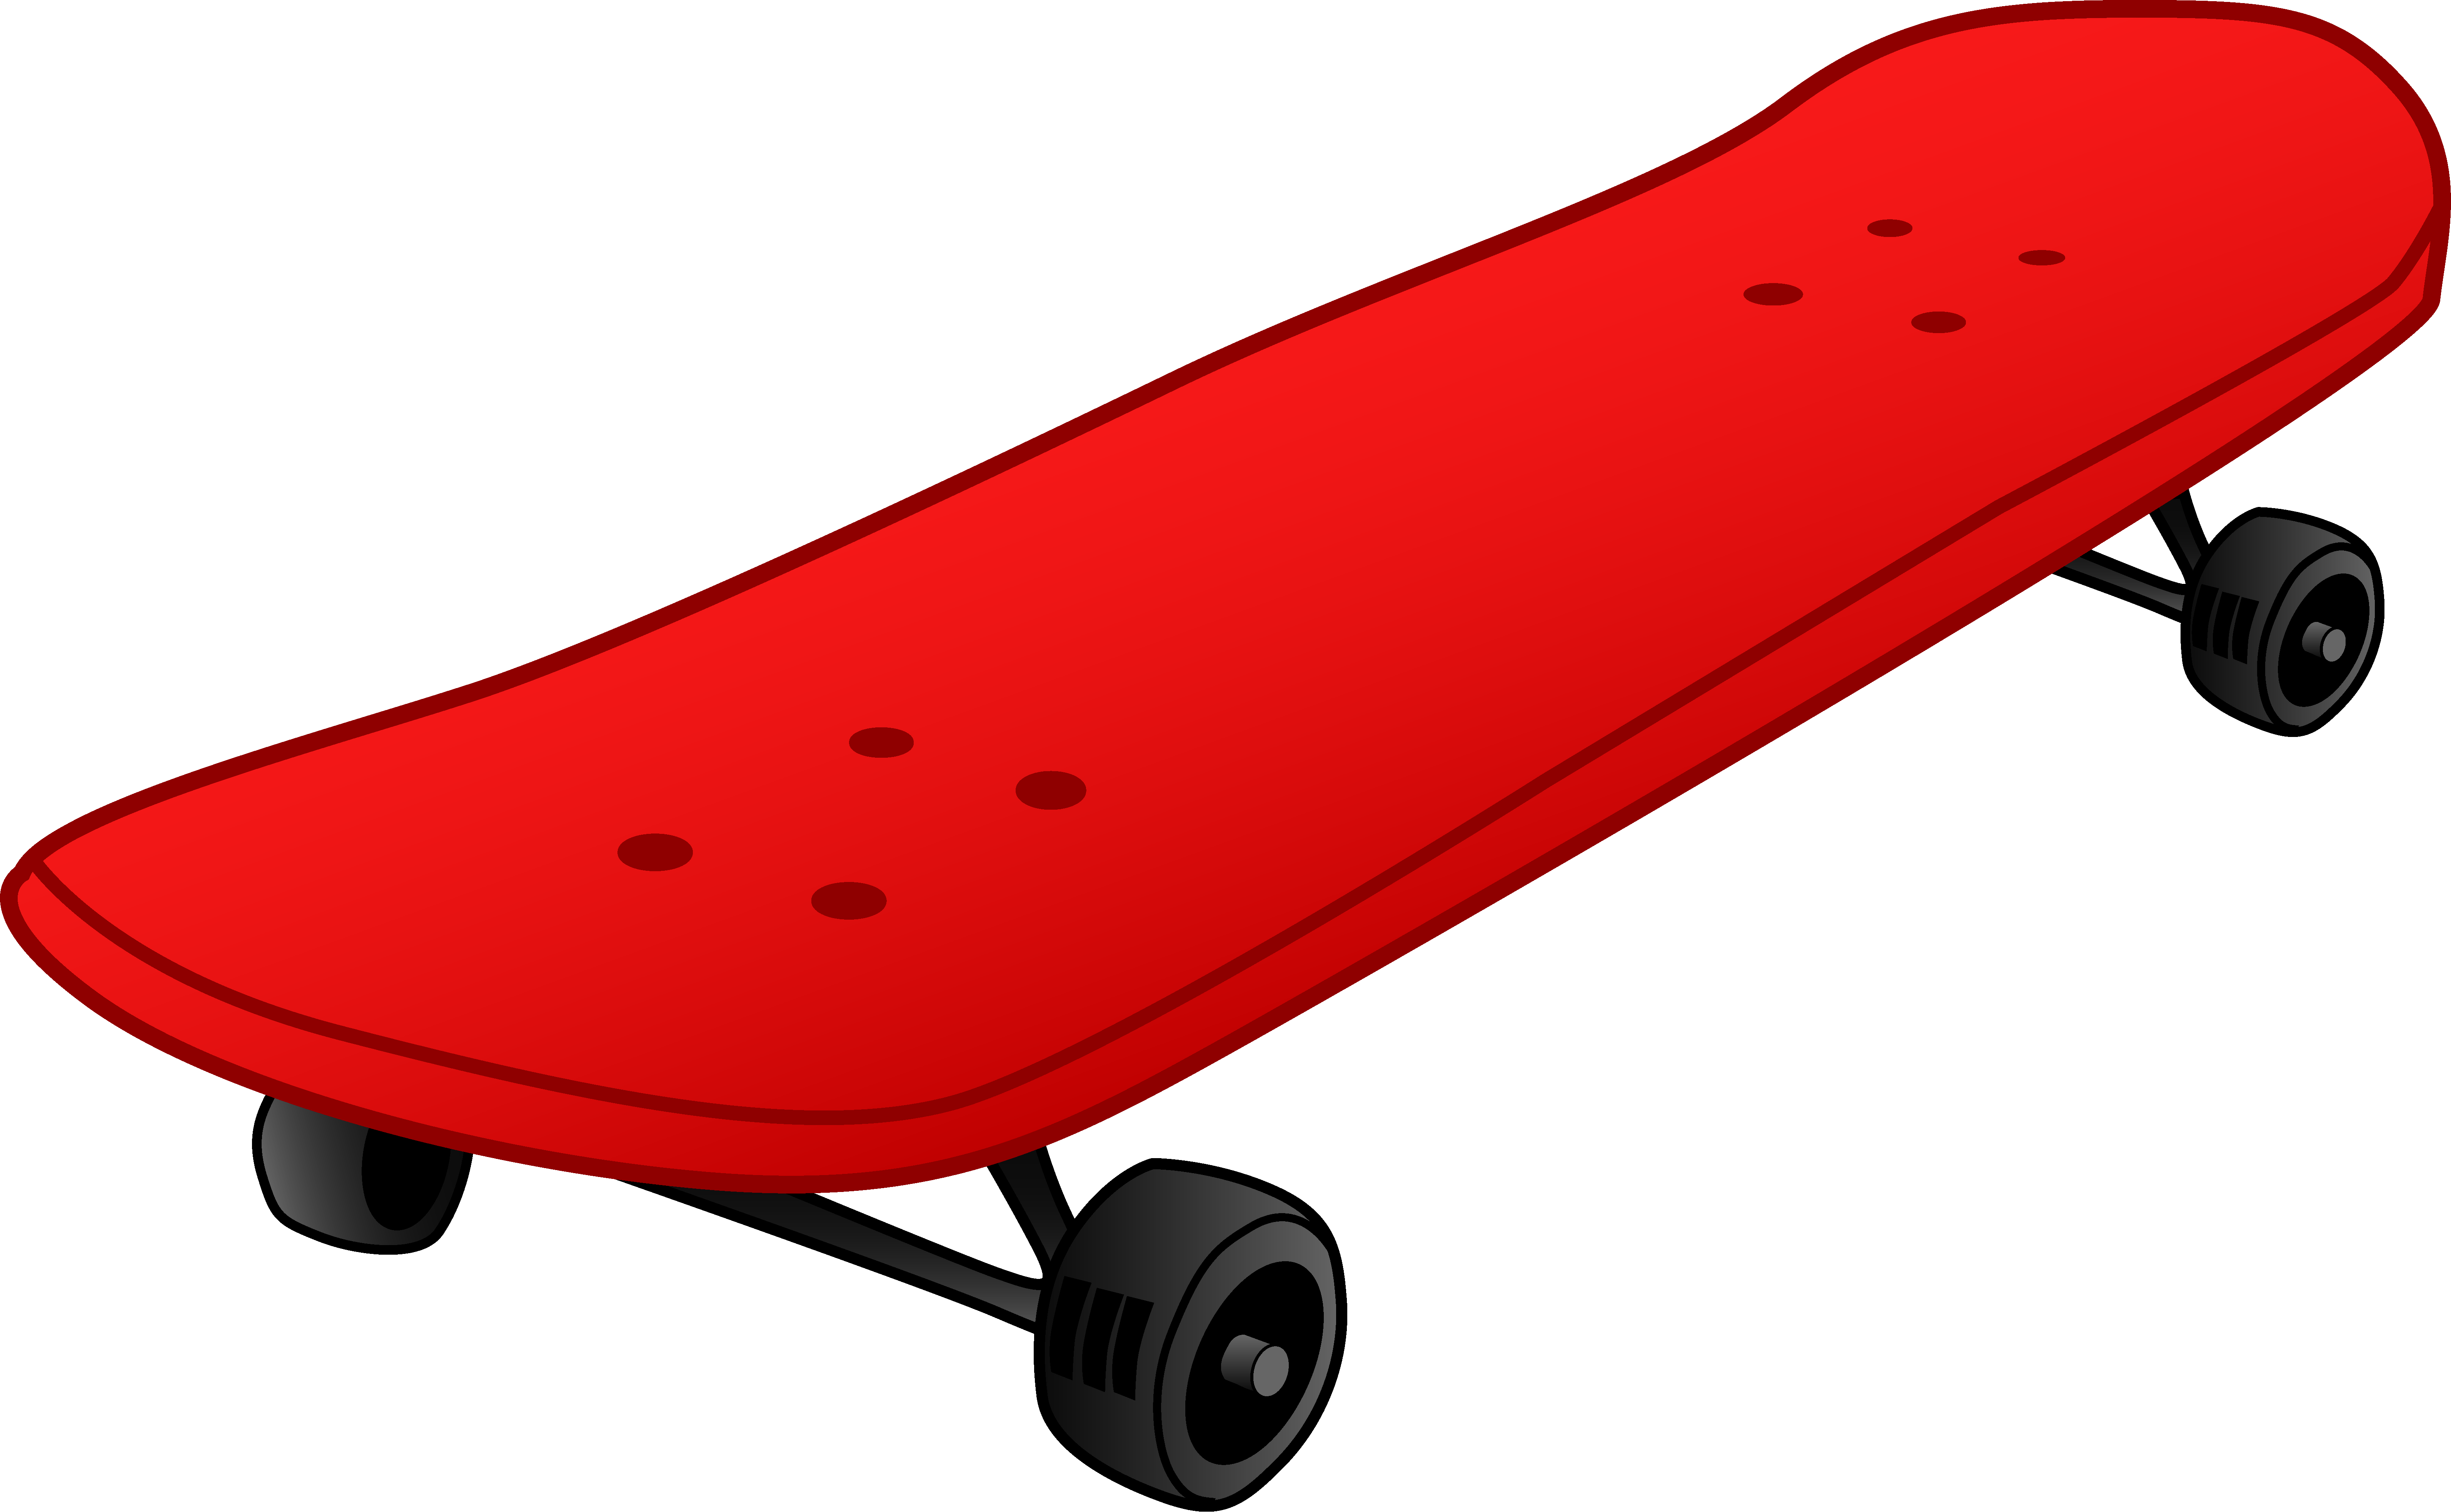 Skateboard Png Hd Red Skateboard Clipart